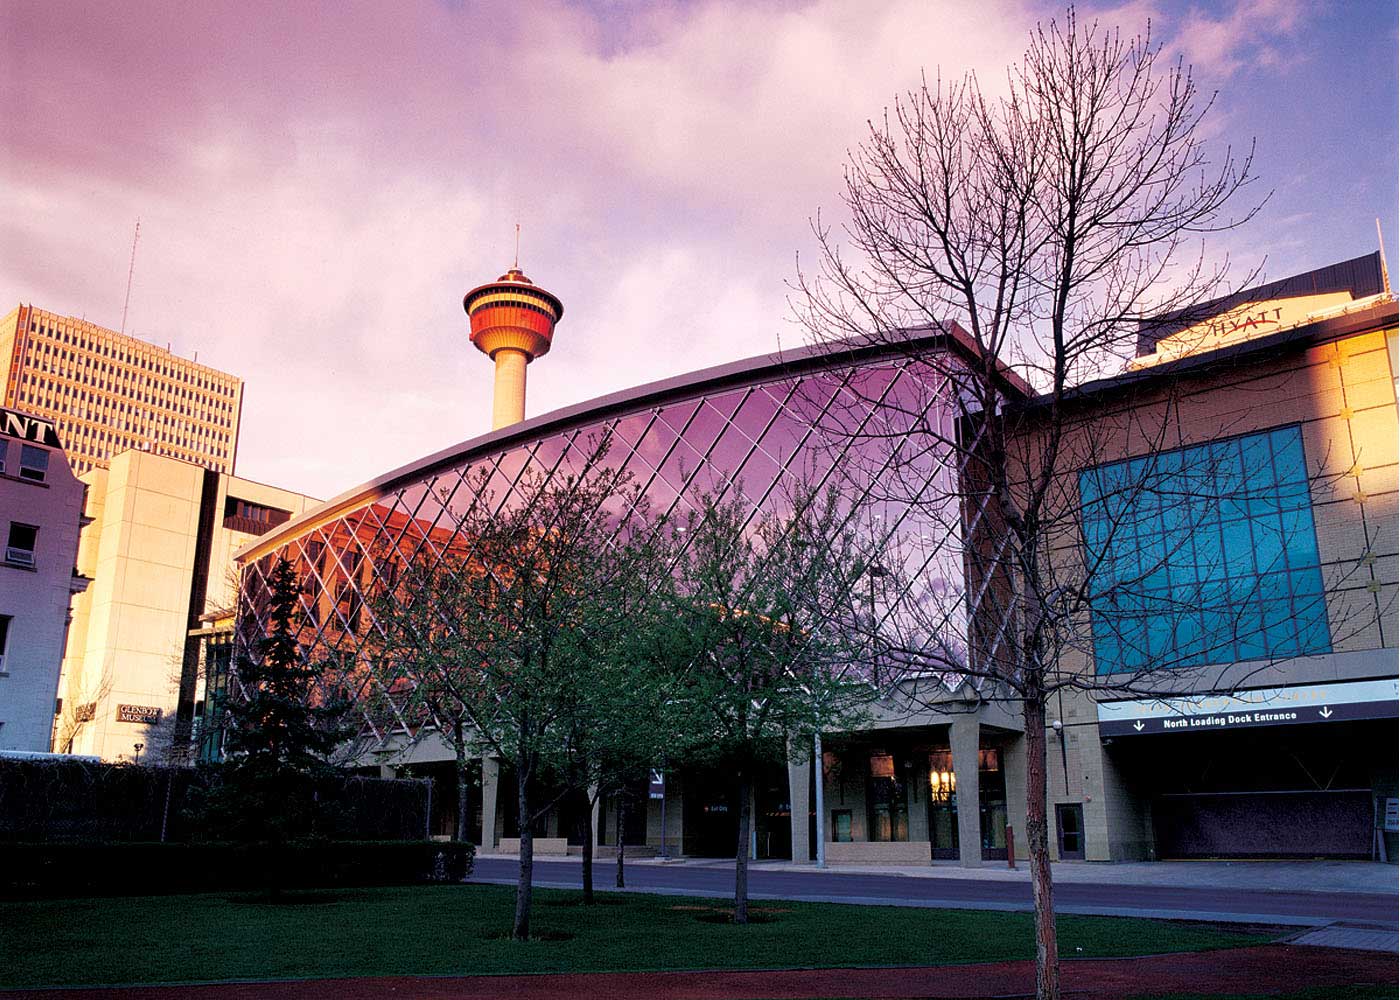 Calgary telus convention centre